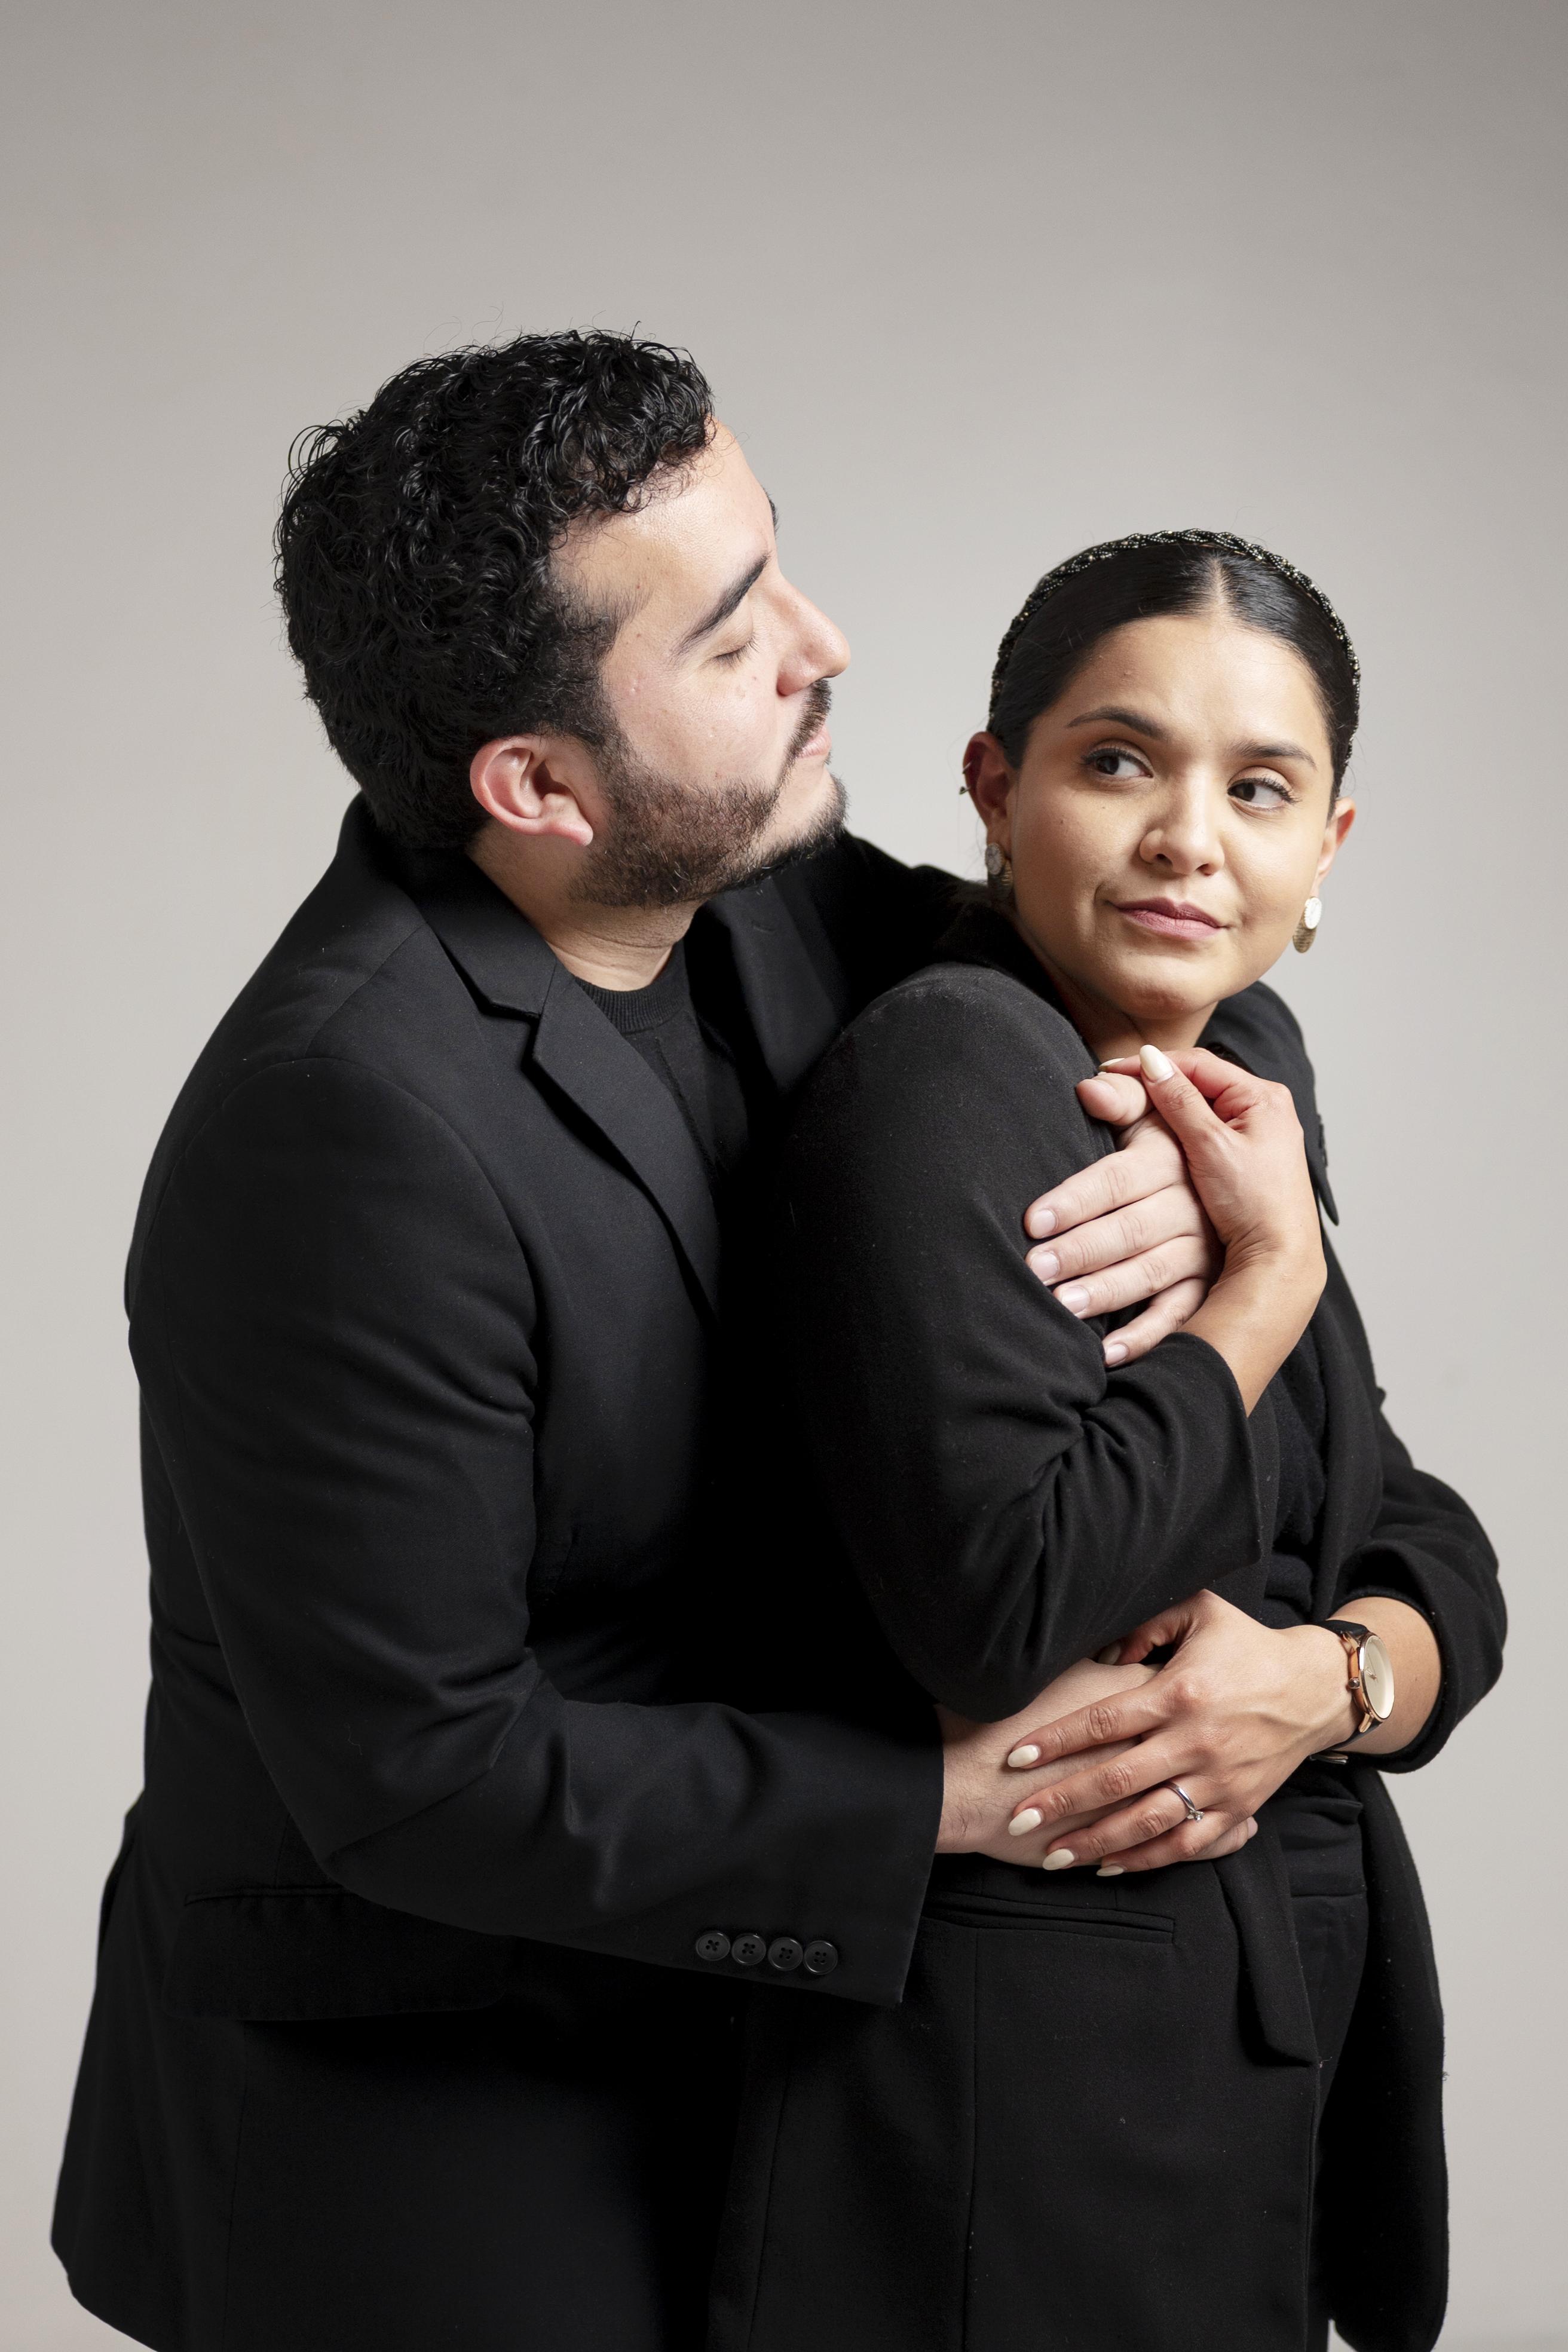 The Wedding Website of Lorena Gonzalez Acosta and Jose Adrian Ramos Avila